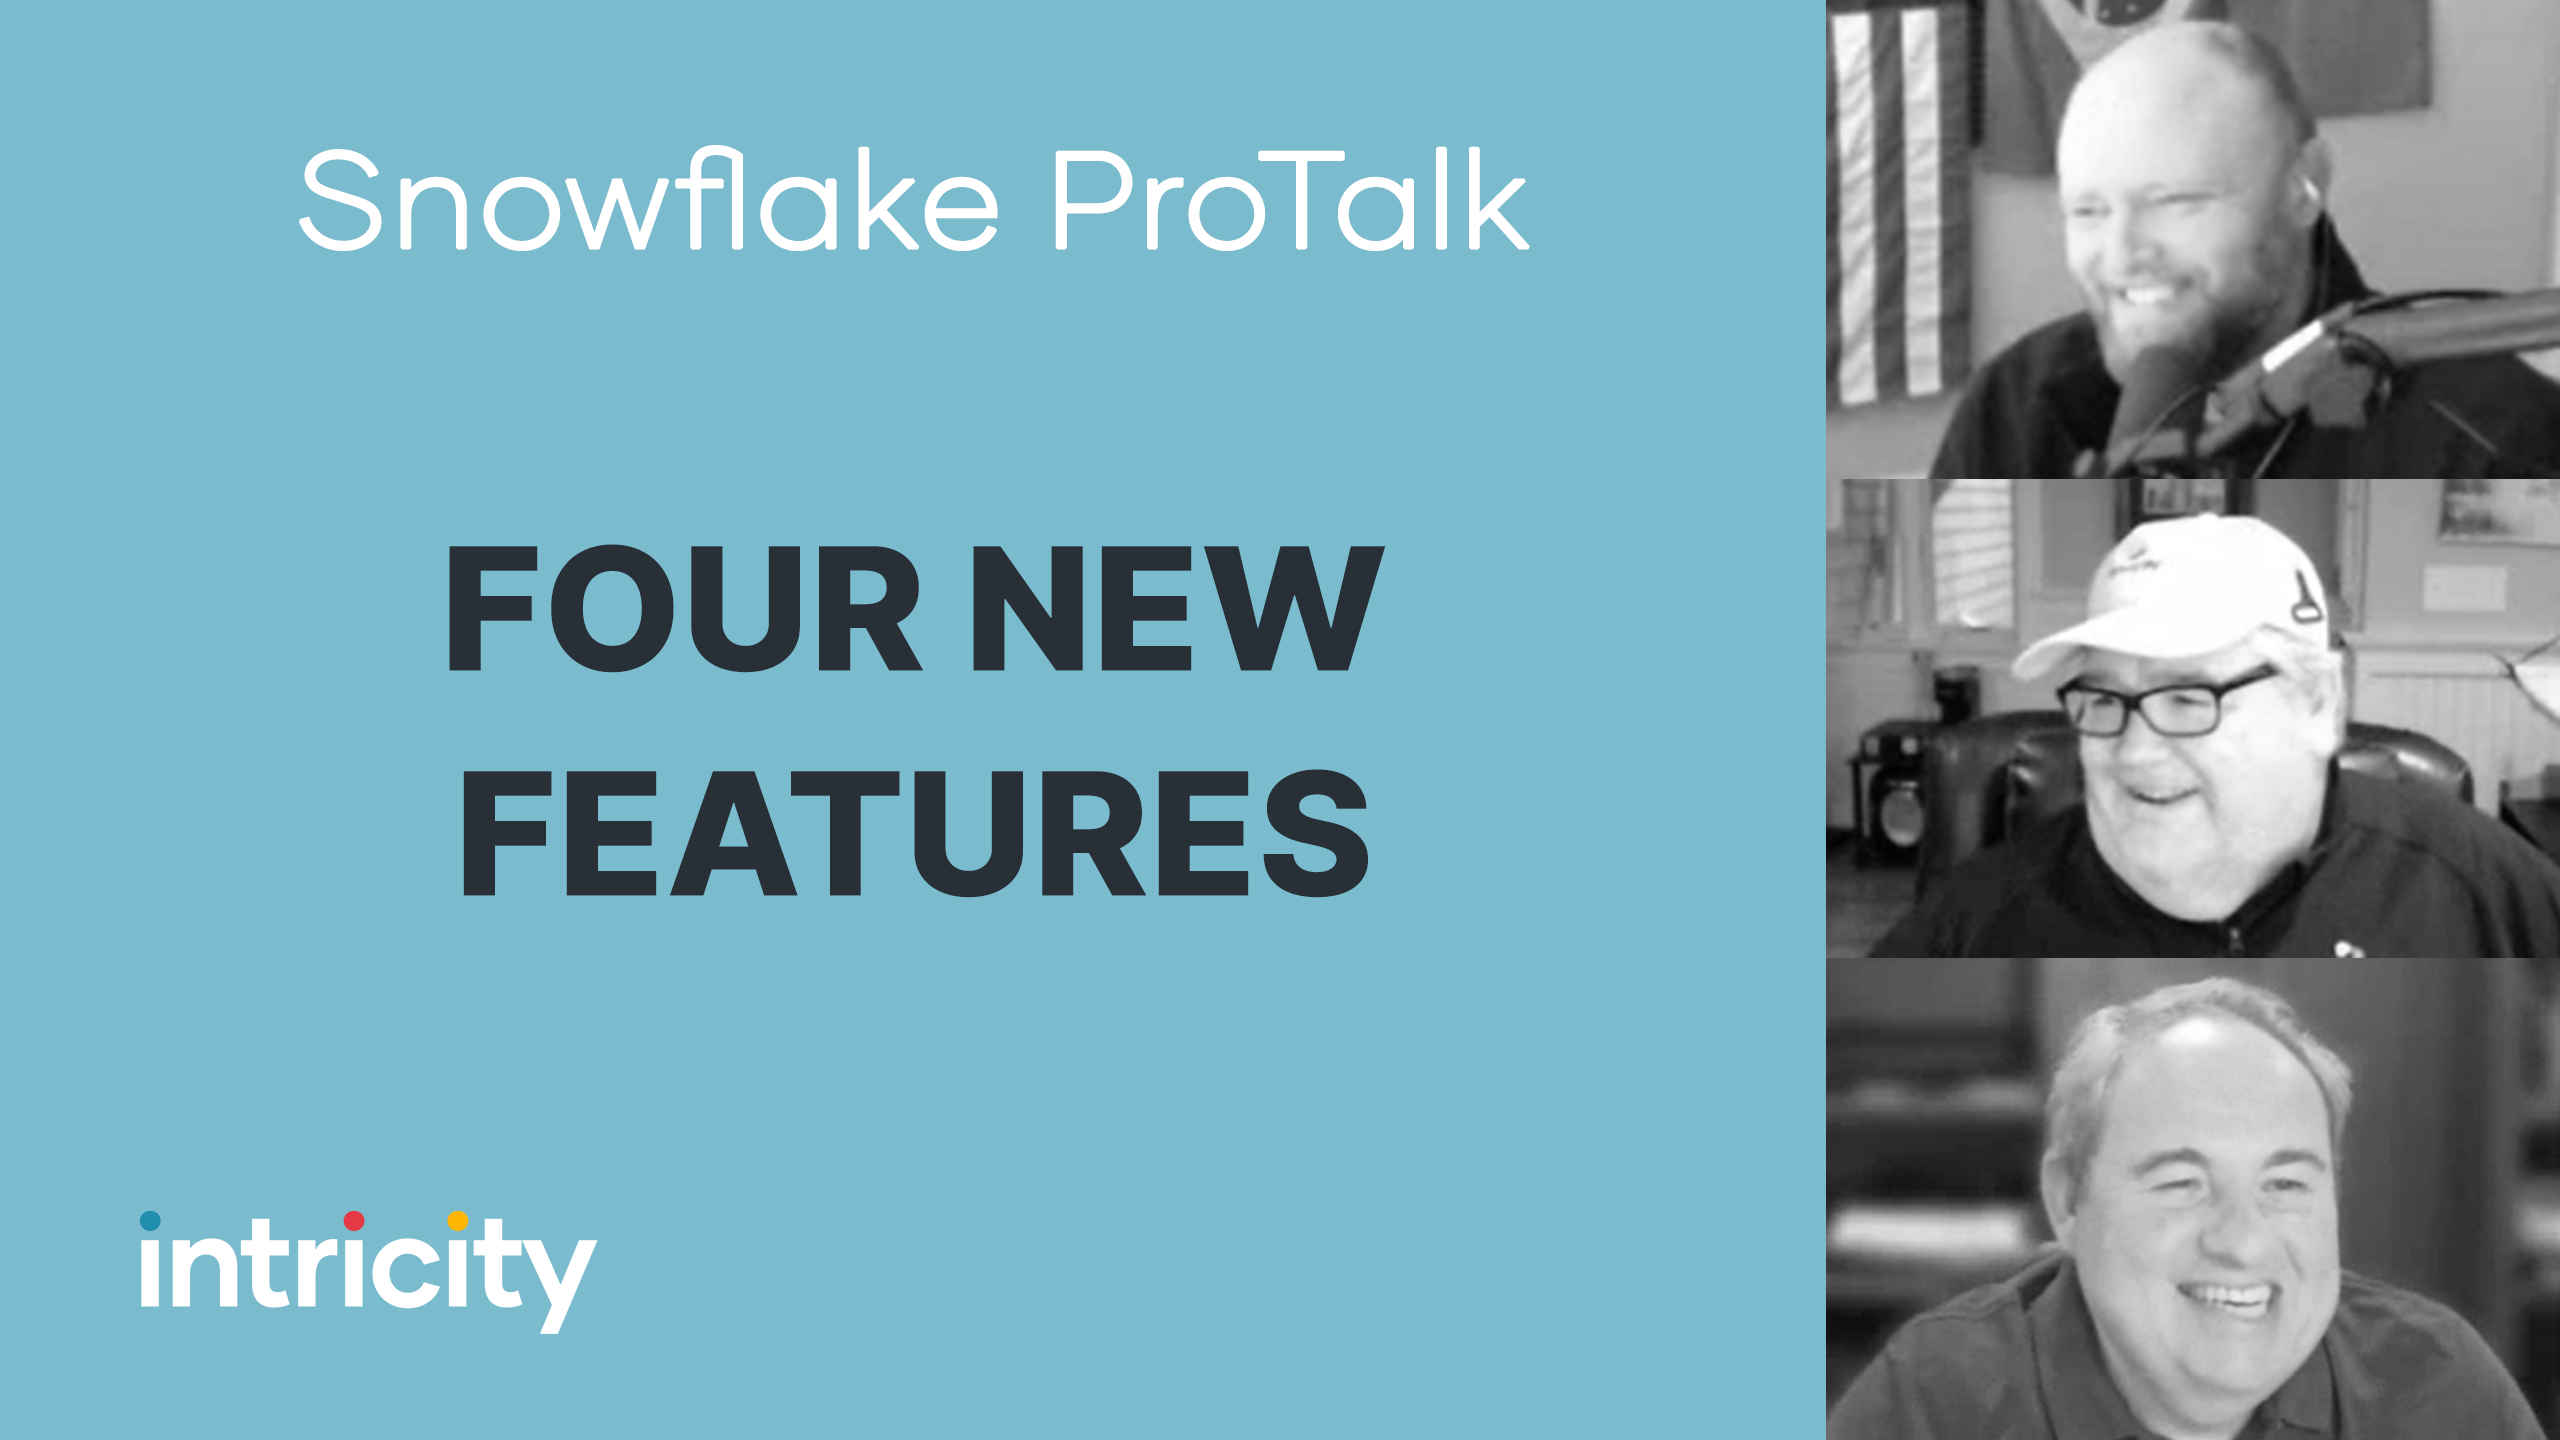 Snowflake Pro Talk Four New Features